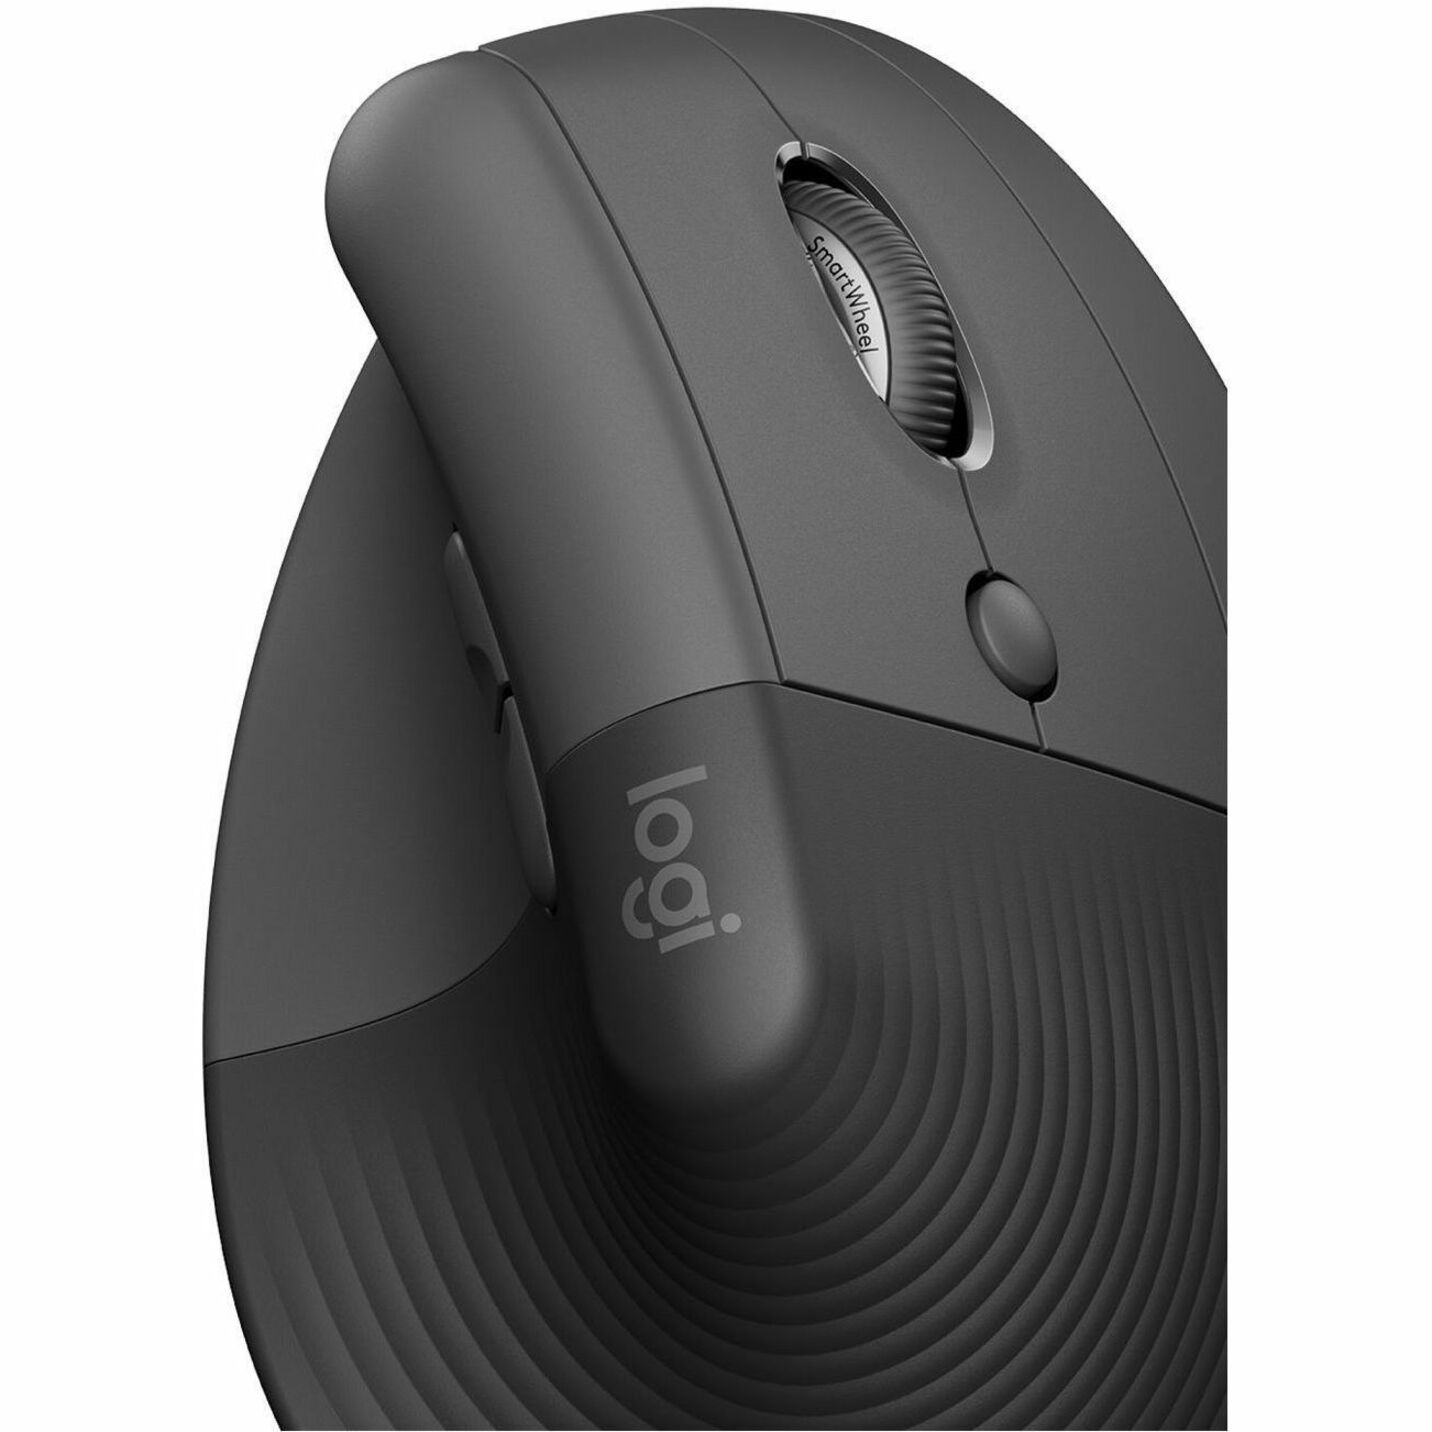 Logitech 910-006466 Lift Vertical Ergonomic Mouse (Graphite), 2 Year Warranty, Small/Medium Hand Size, 4000 dpi, Bluetooth Wireless